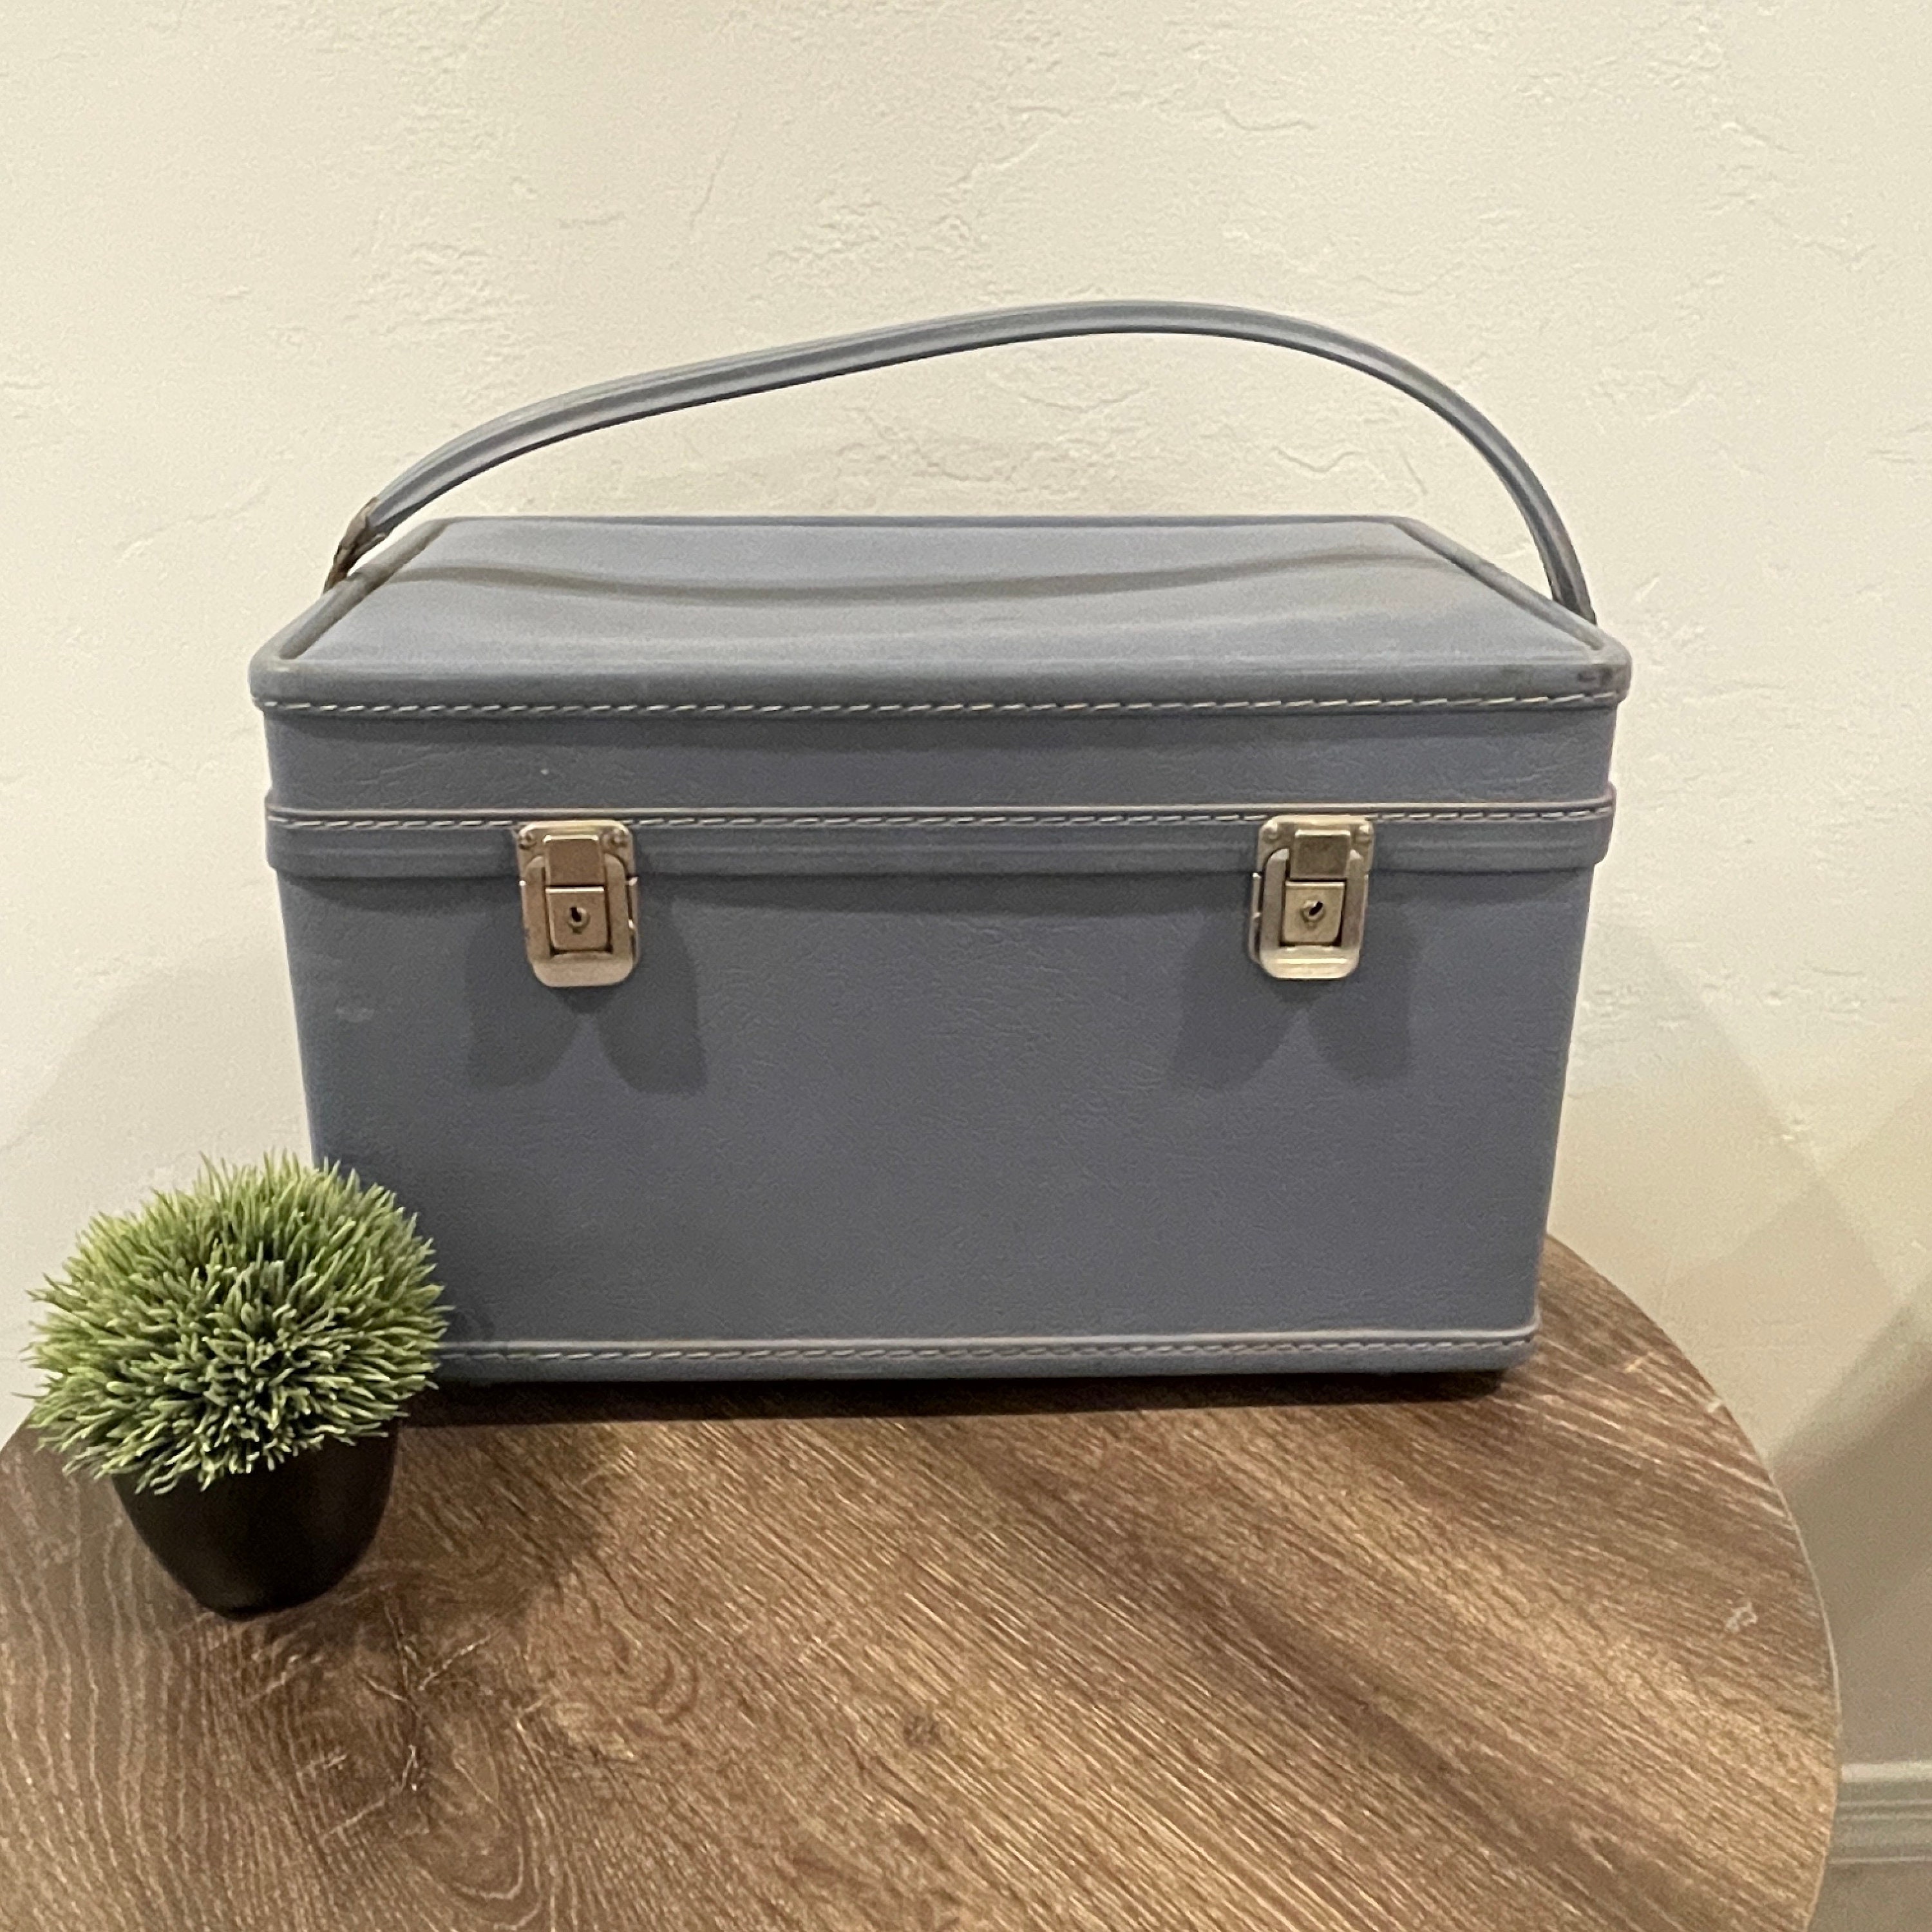 The Botanist Vanity  Small Vintage Style Suitcase Travel Vanity Case –  Steamline Luggage